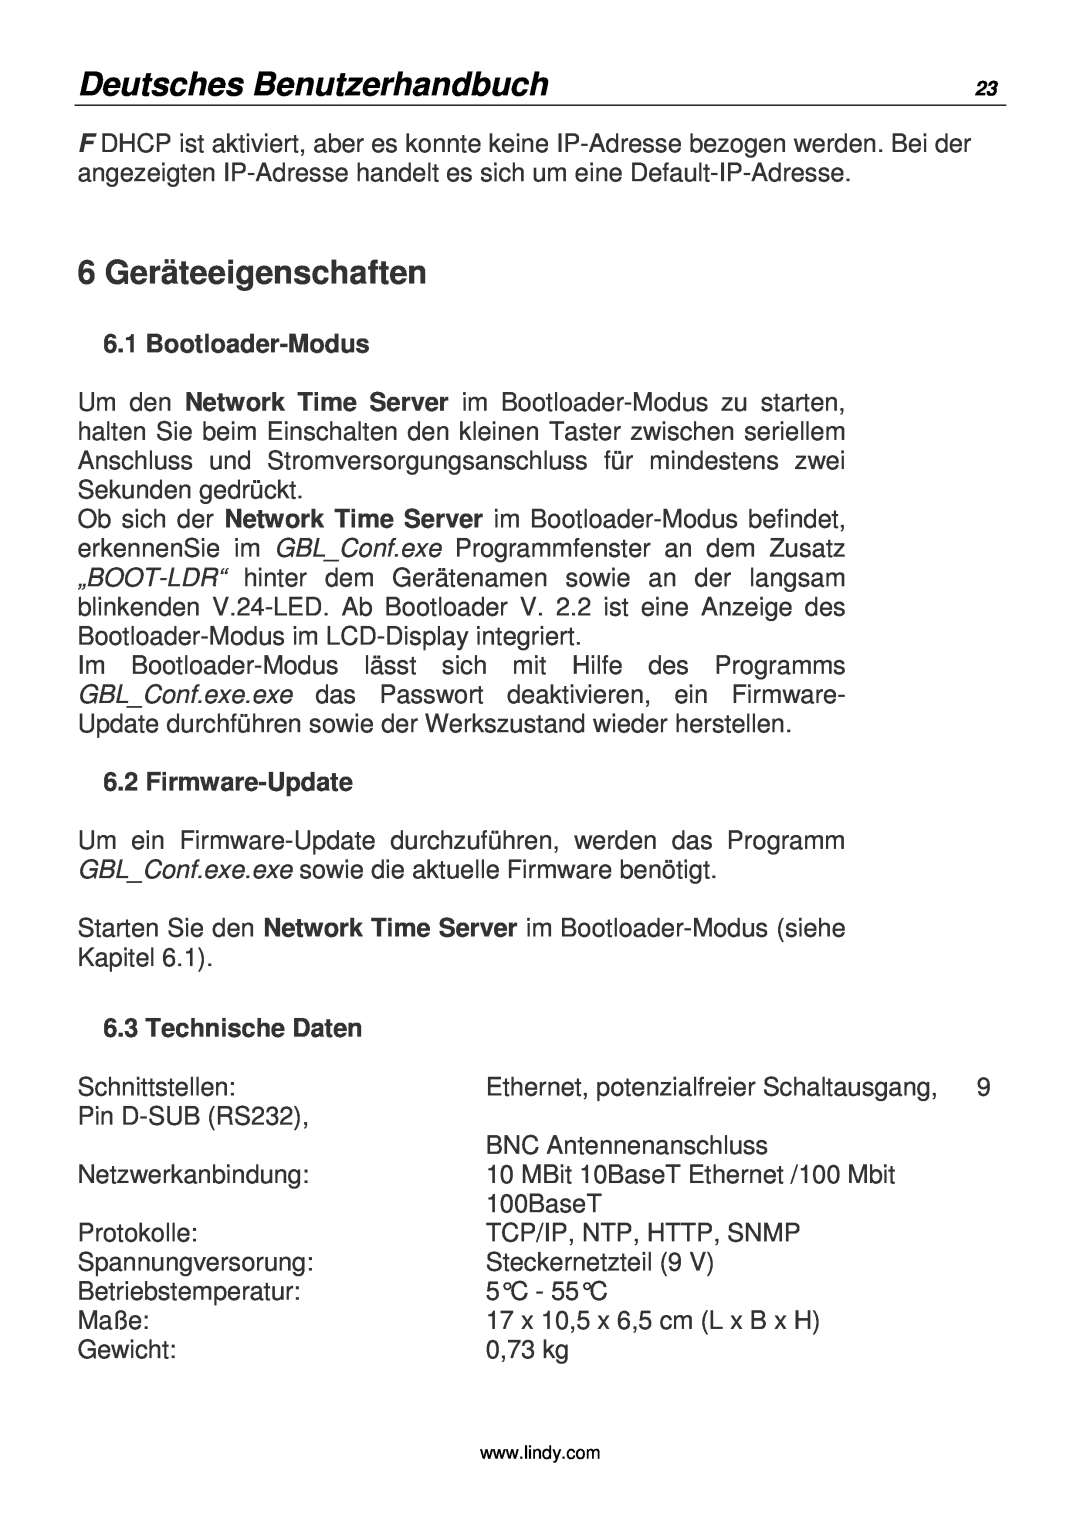 Lindy 20988 manual 6 Geräteeigenschaften, Deutsches Benutzerhandbuch, Bootloader-Modus, Firmware-Update, Technische Daten 